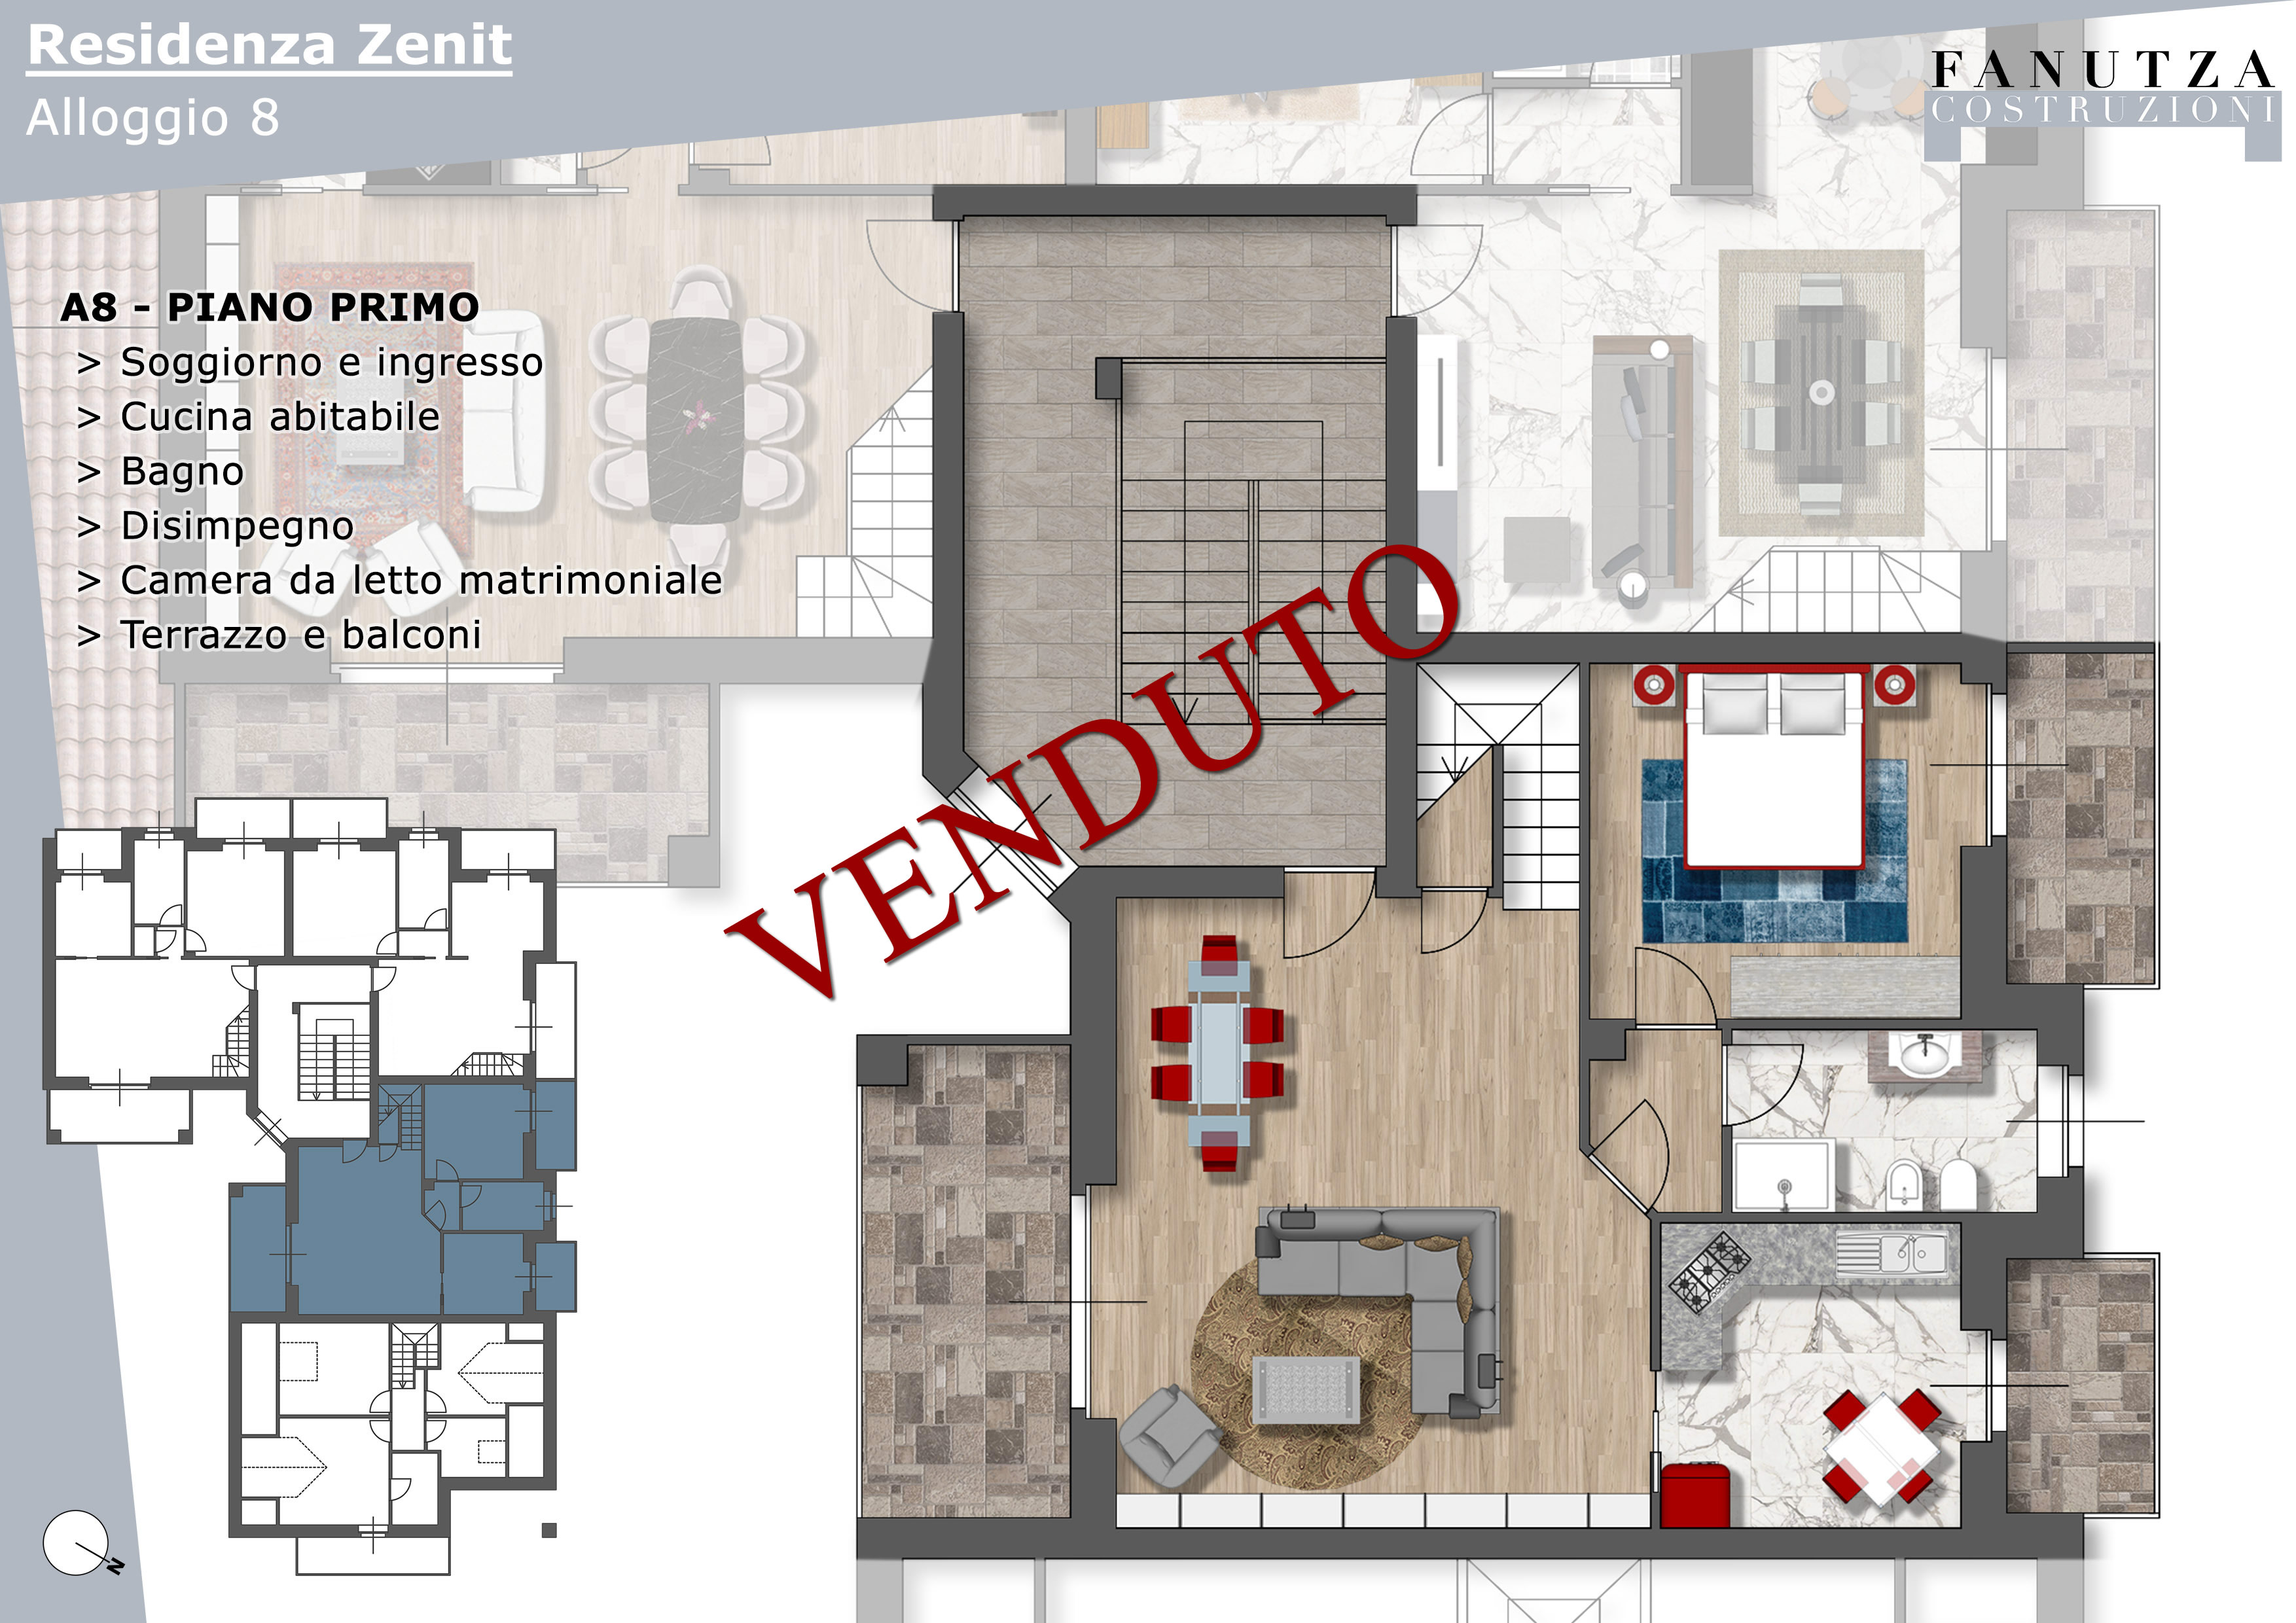 Residenza Zenith